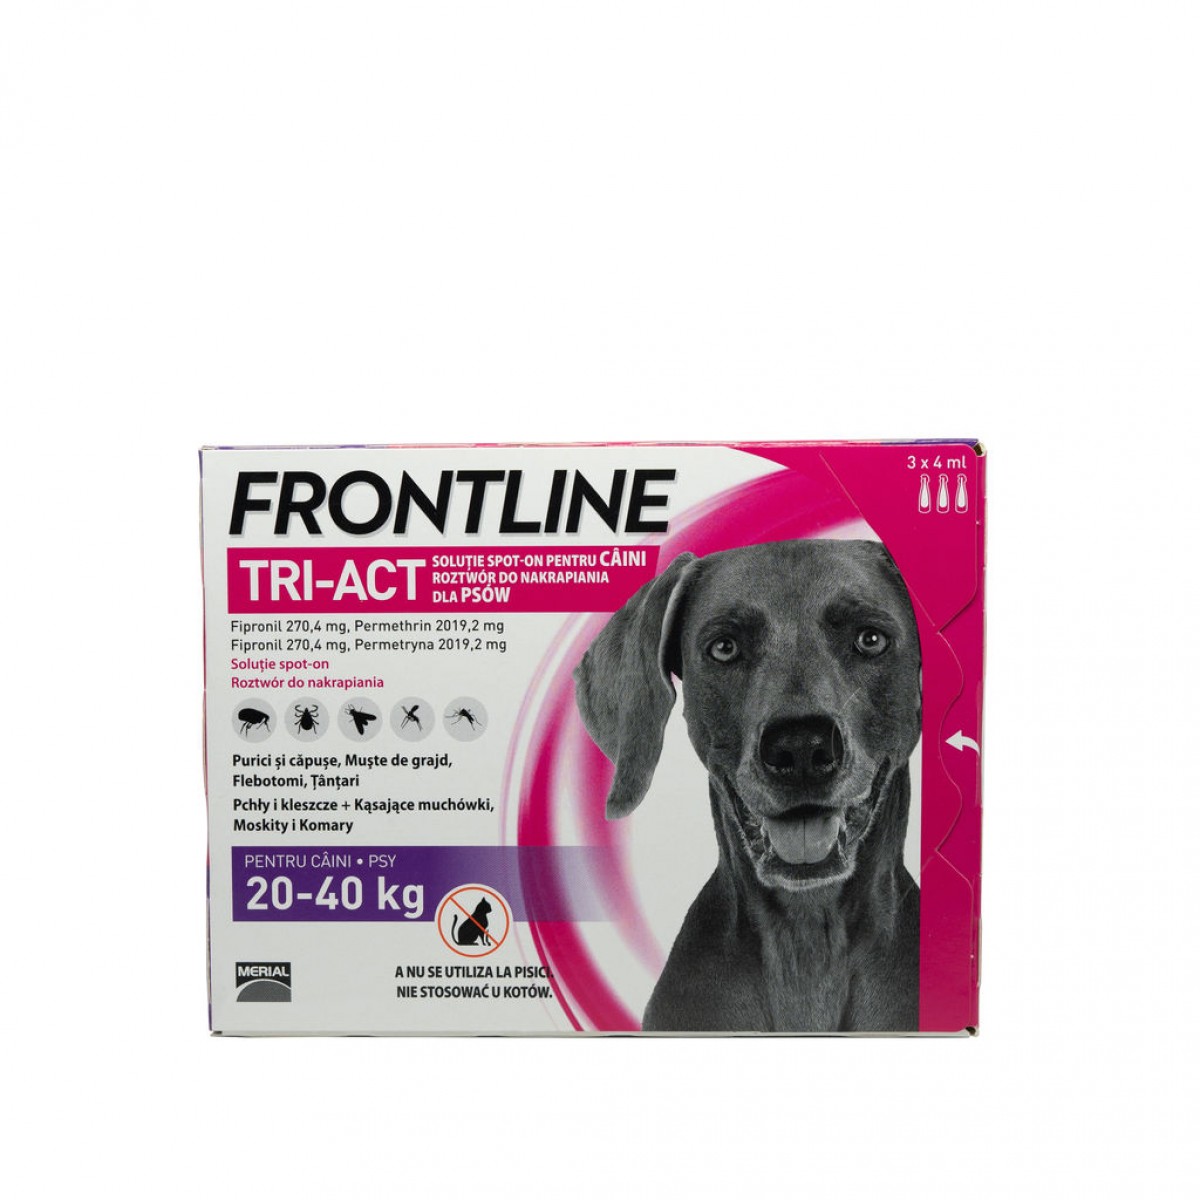 Frontline Tri-Act pentru caini de talie mare 20-40kg, 3 pipete antiparazitare, Antiparazitare externe, Antiparazitare, Câini 